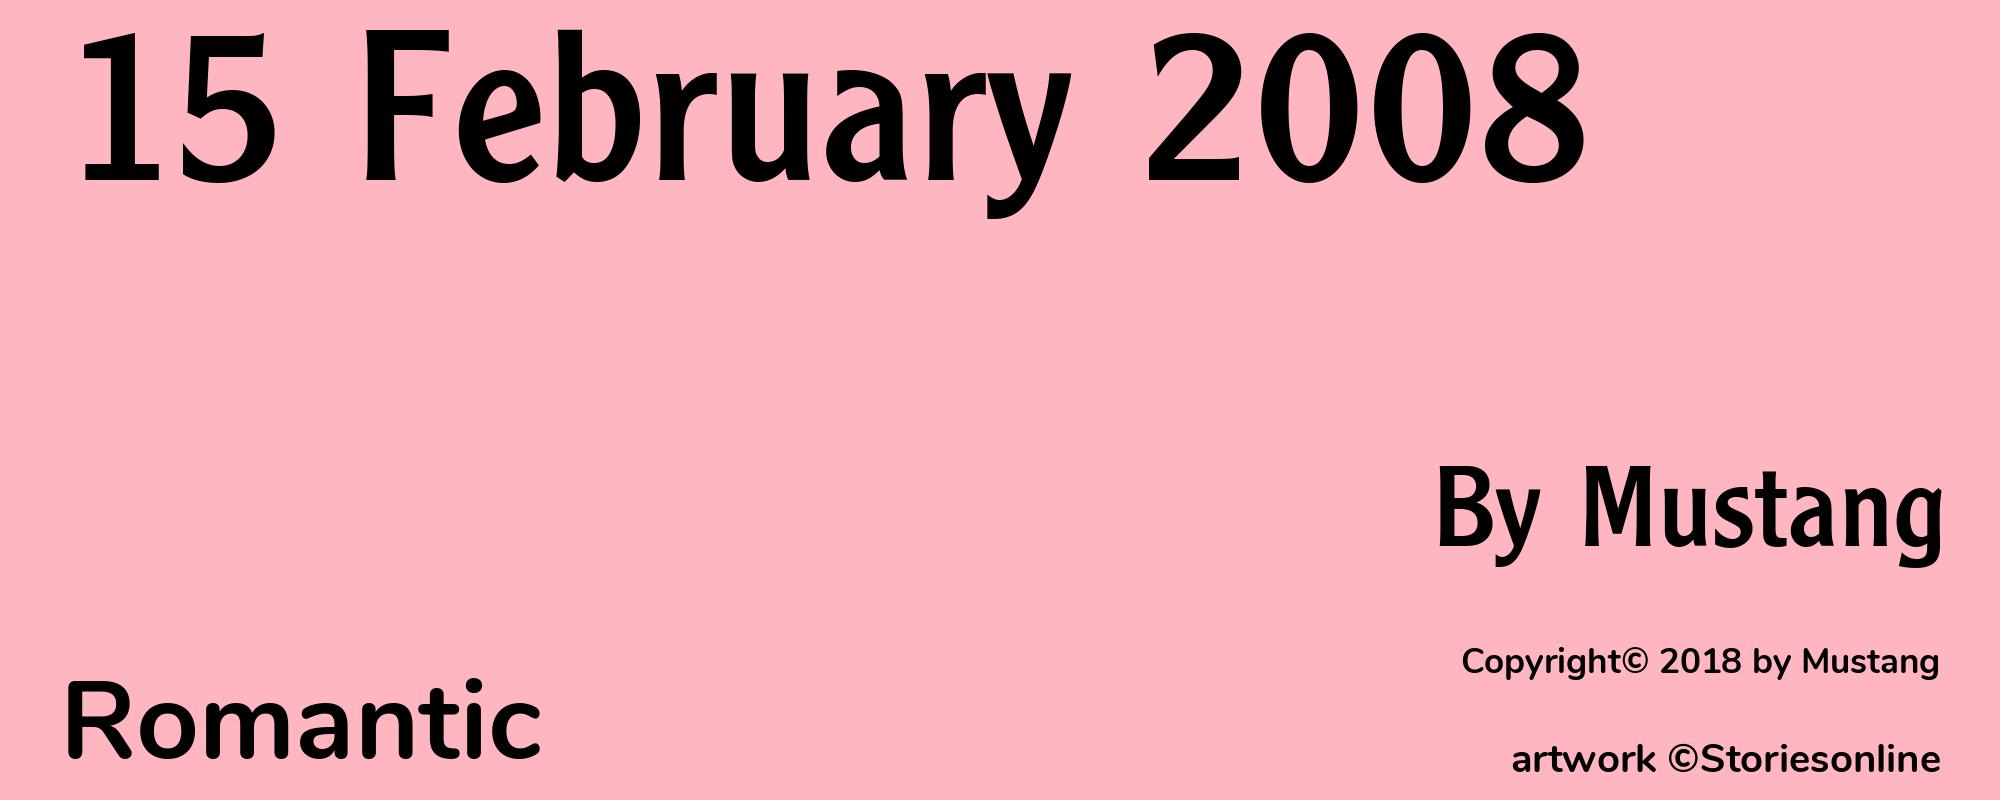 15 February 2008 - Cover